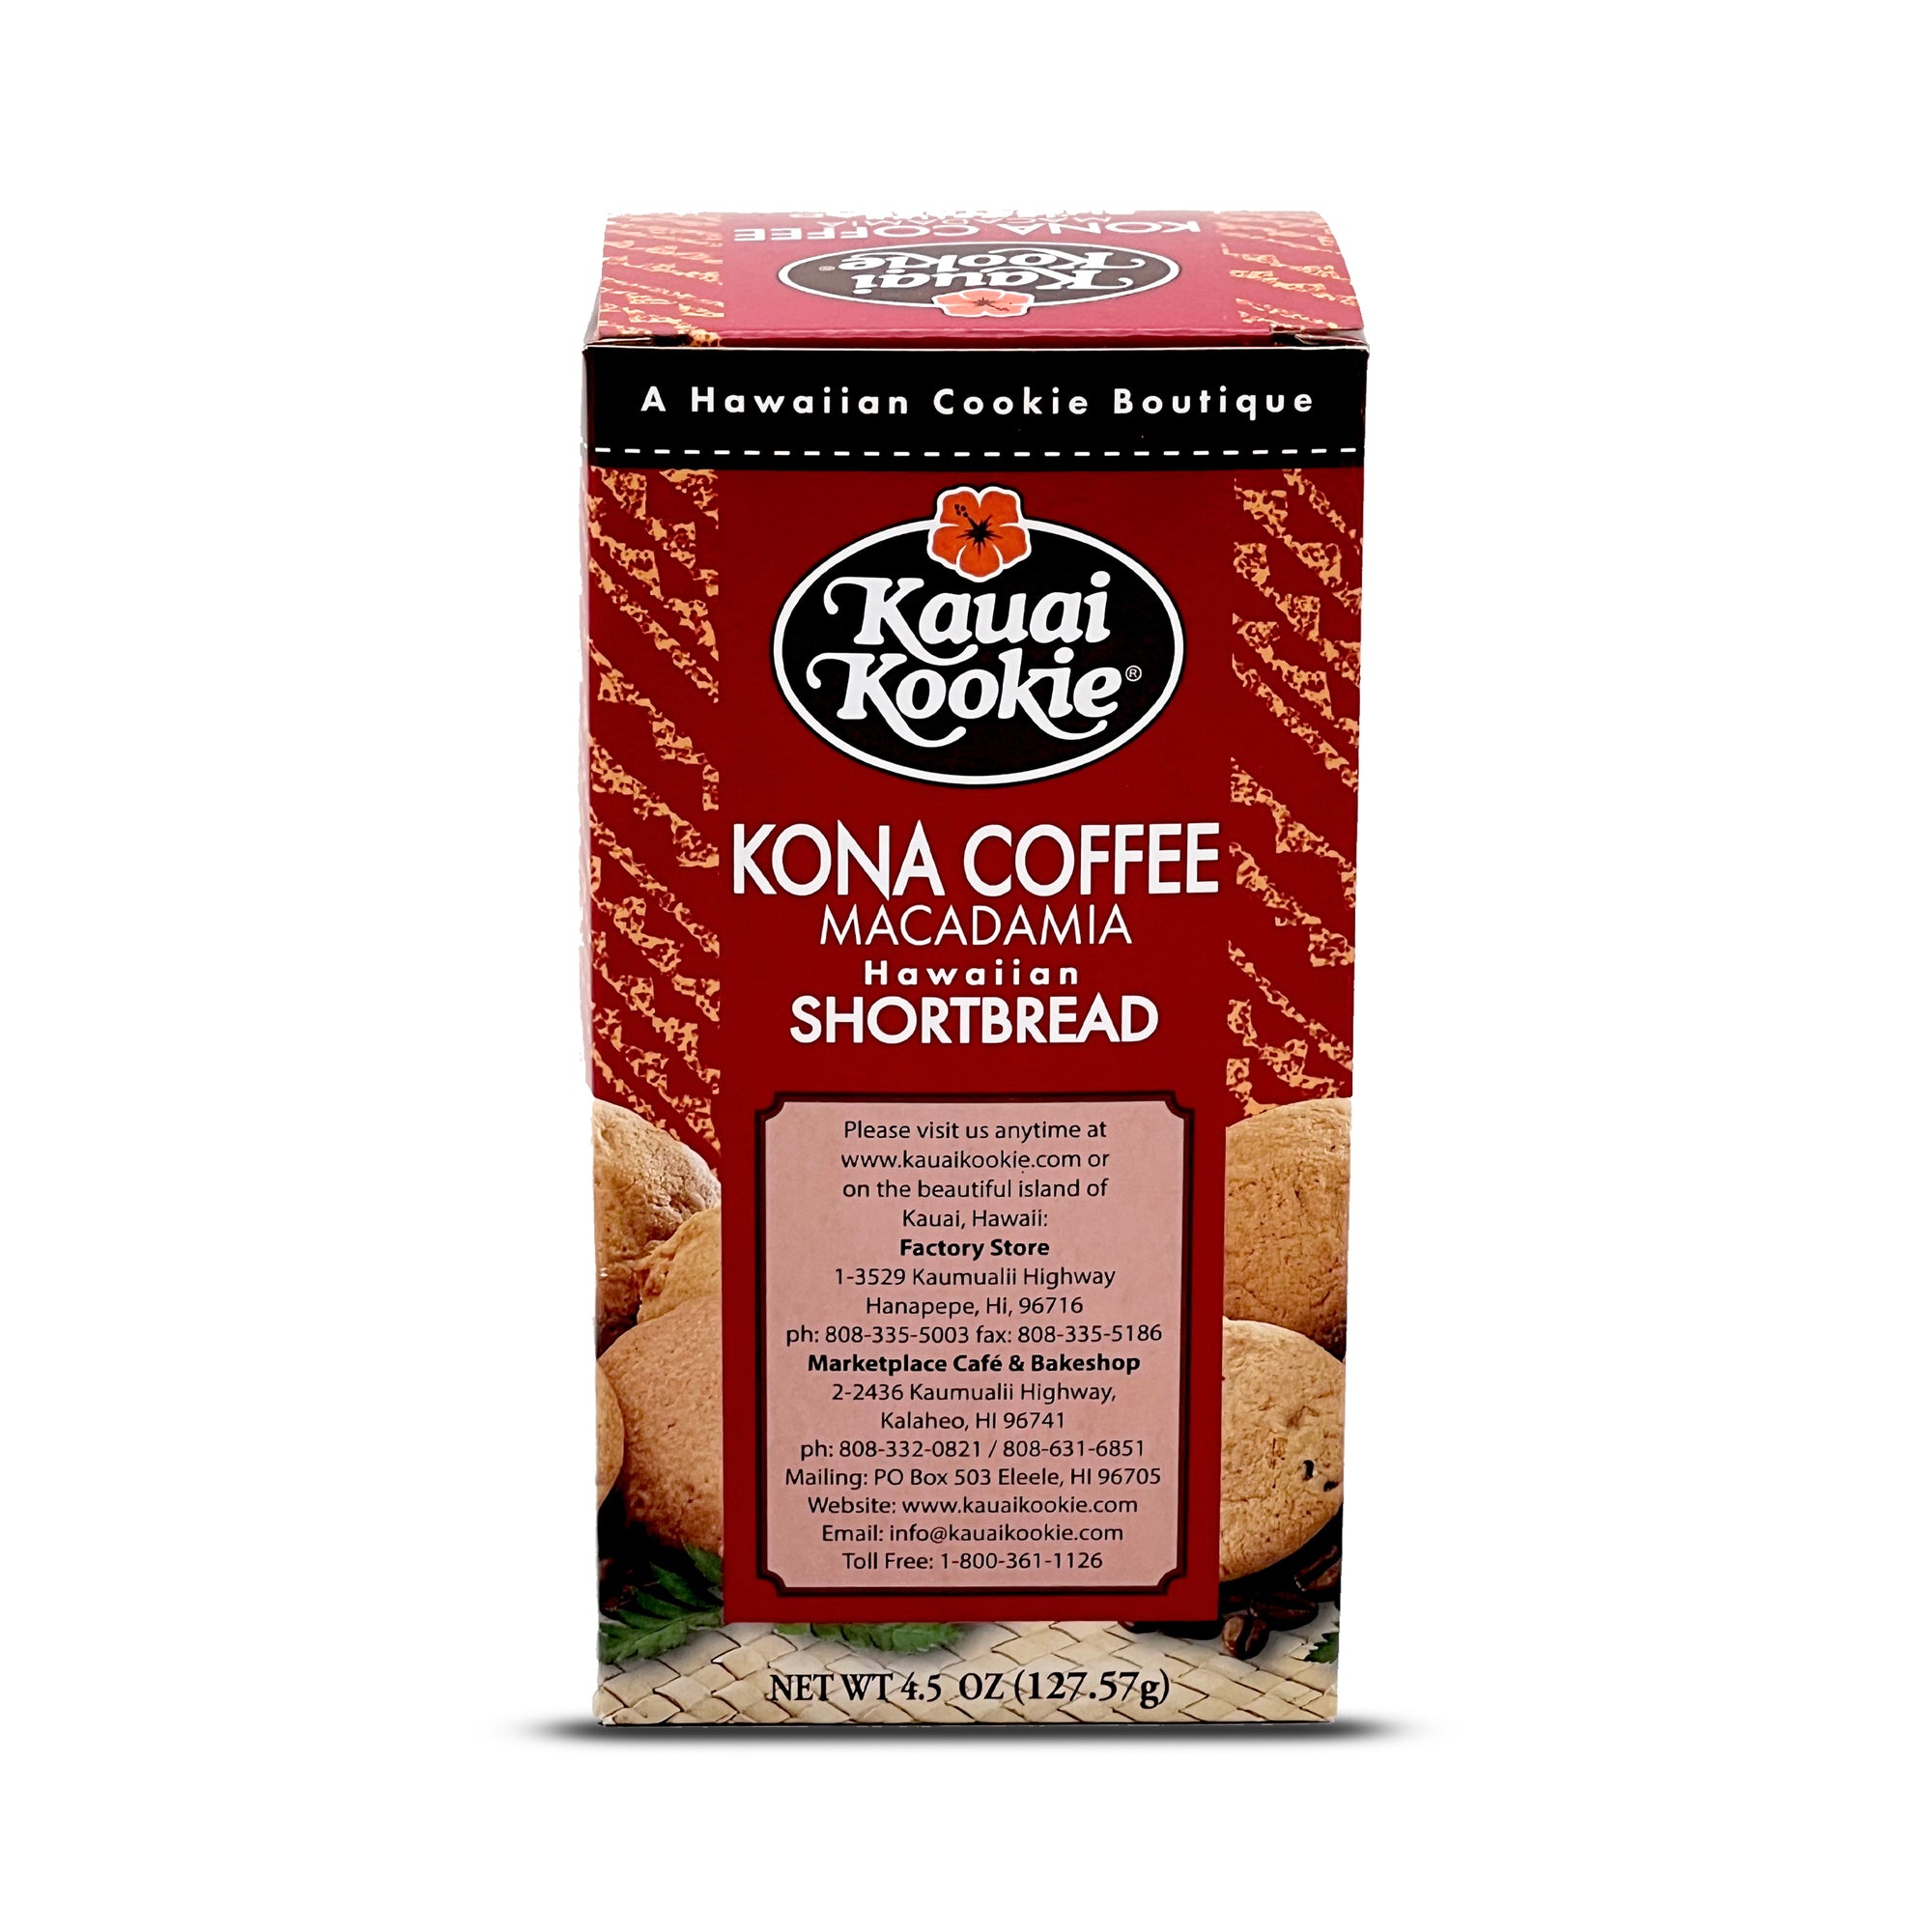 Pop-Up Mākeke - Kauai Kookie - Classic Kona Coffee Macadamia Nut Cookies - Back View